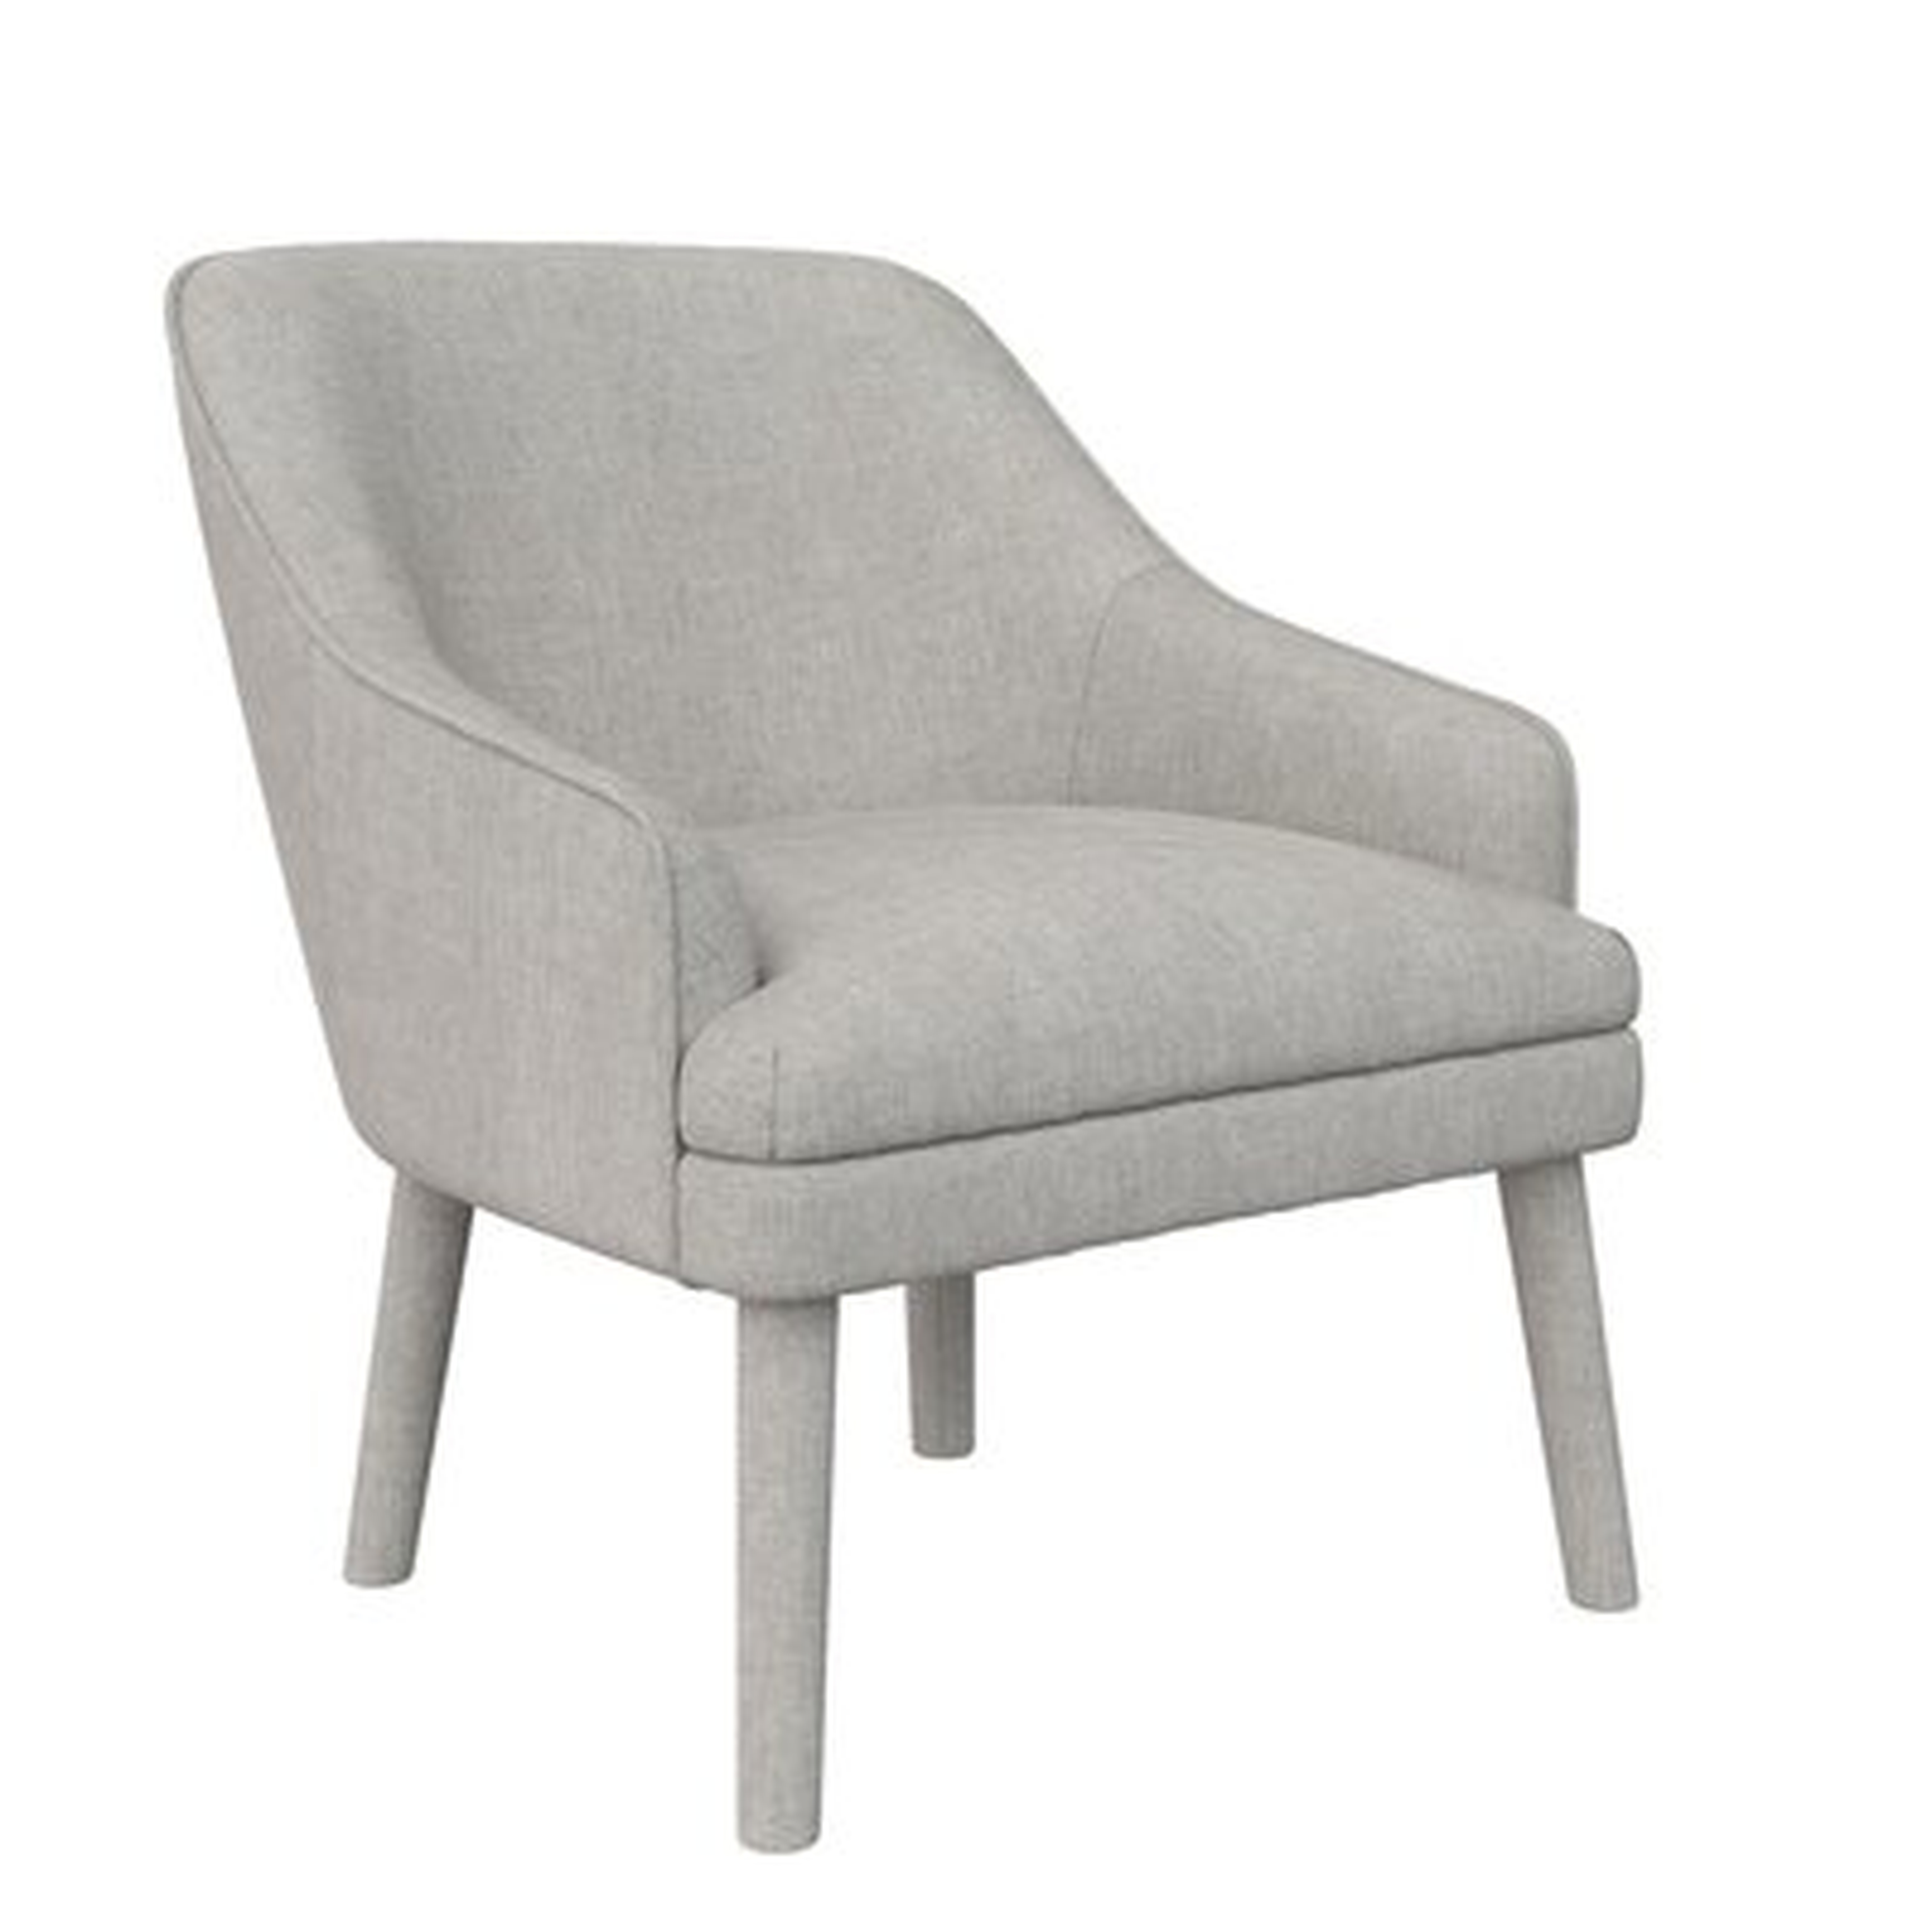 Effie Upholstered Accent Chair - Wayfair